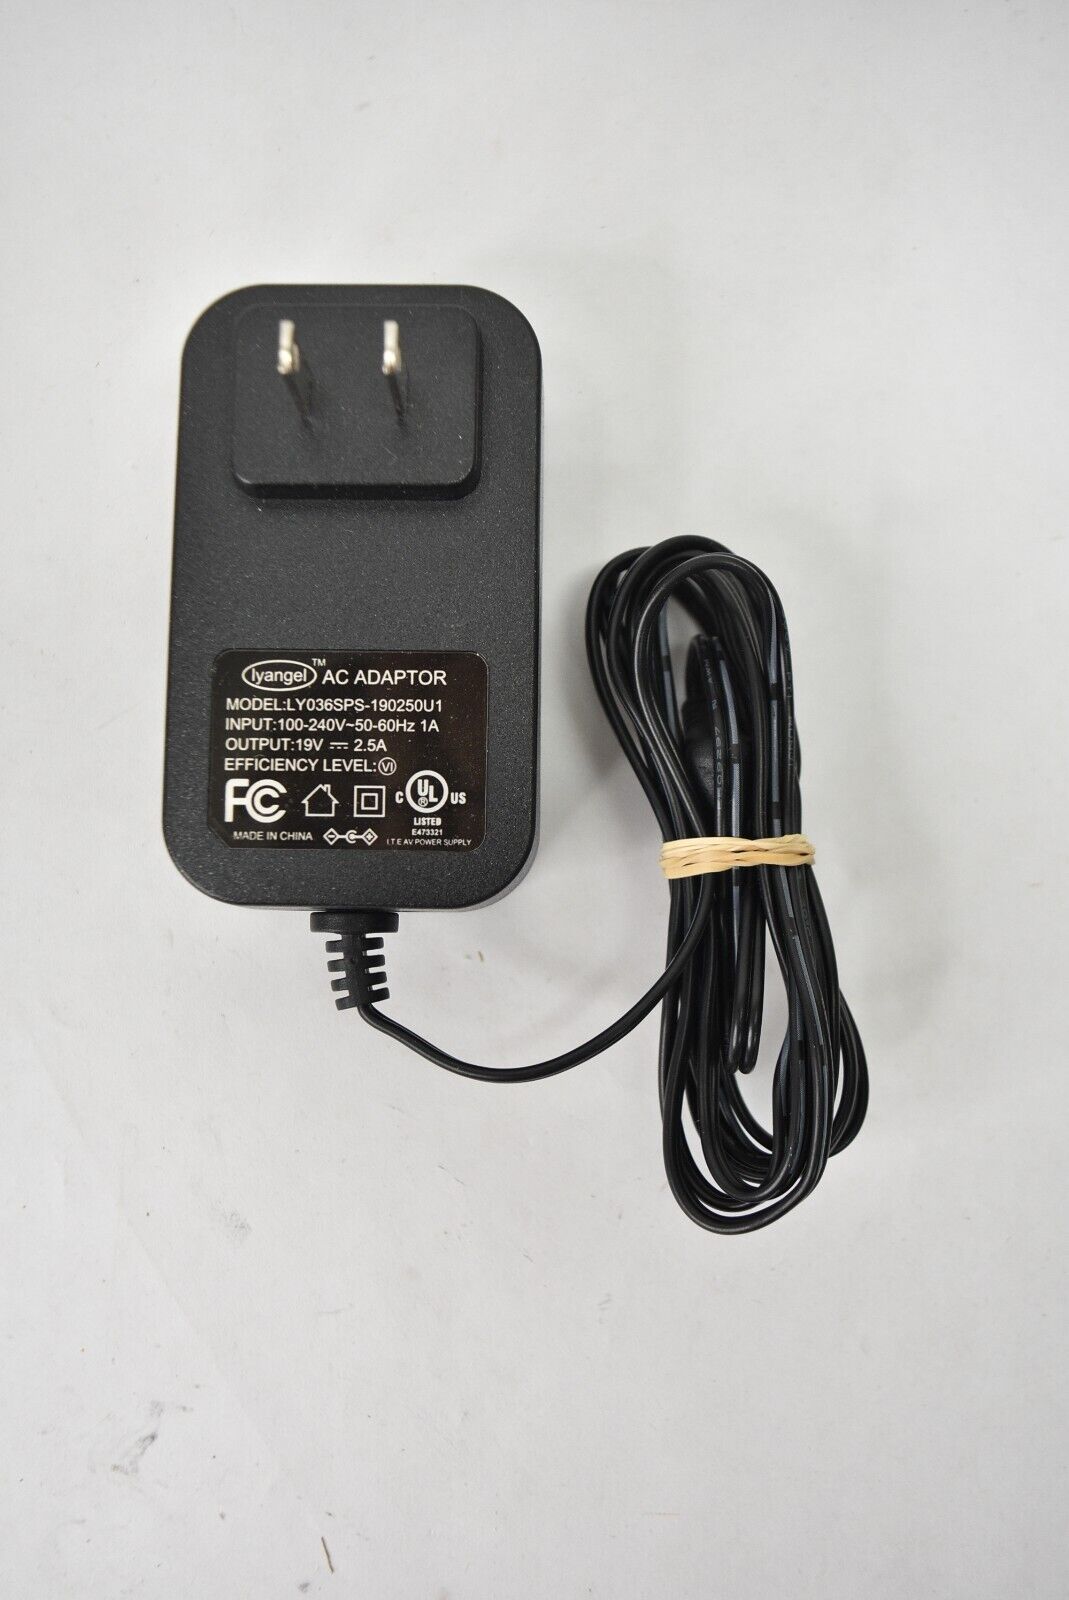 Lyangel AC Adapter Power Supply Unit LY036SPS-190250U1 19V 2.5A Brand: Lyangel Type: Adapter O